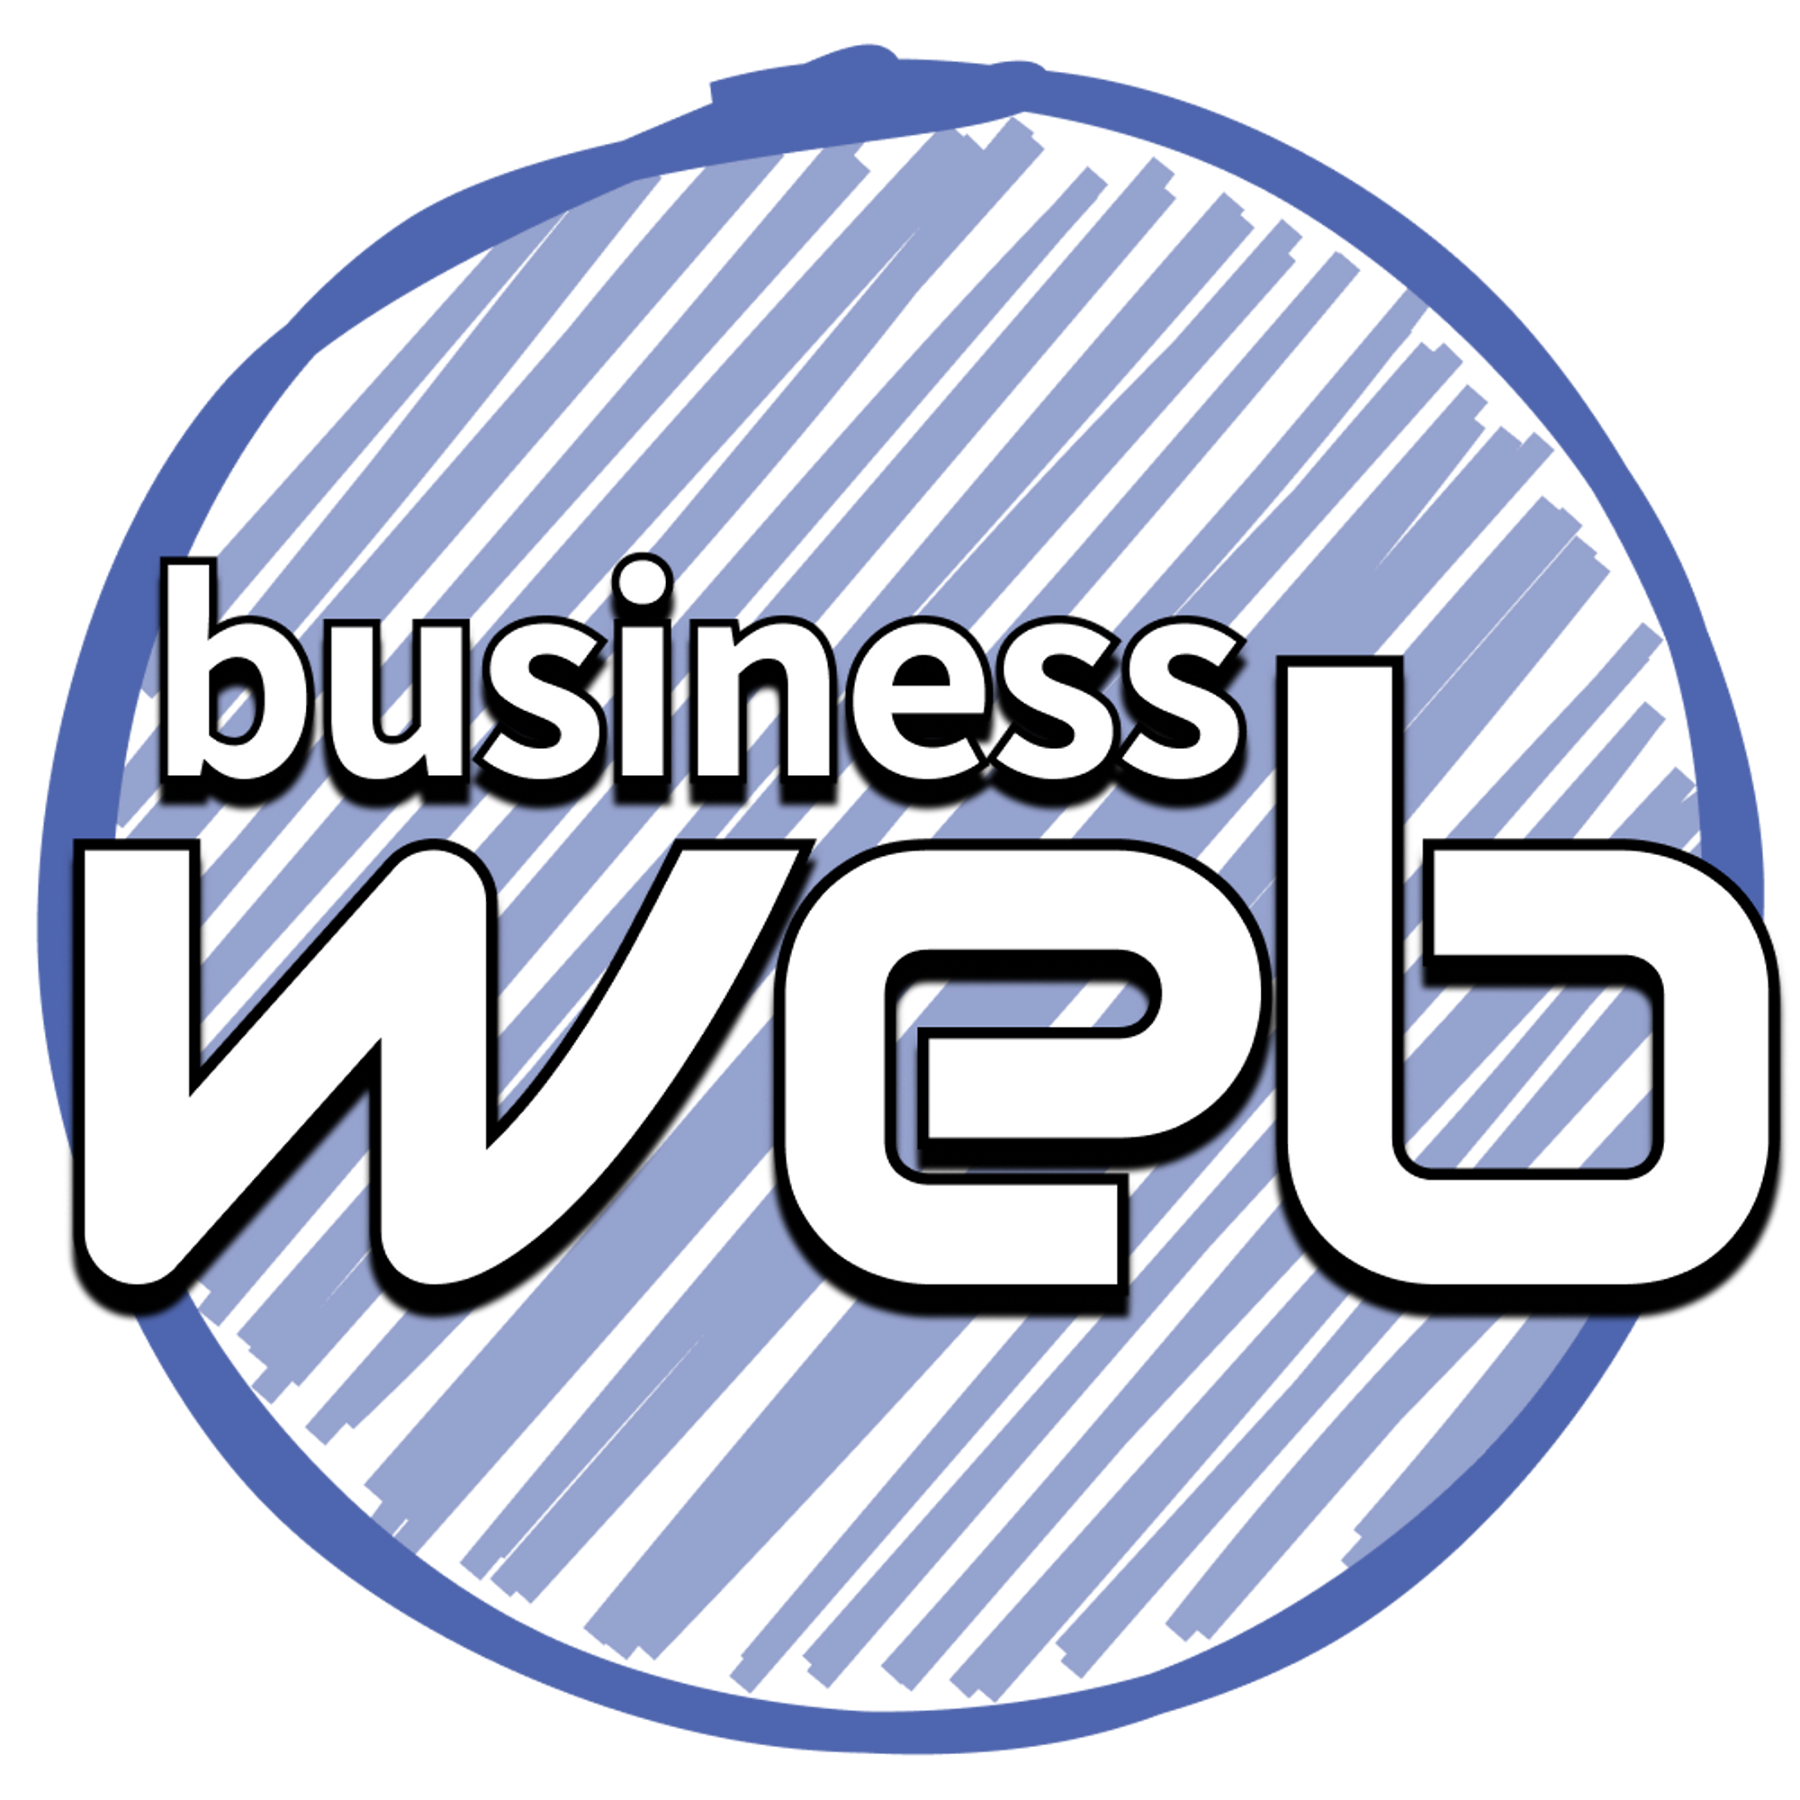 Business Web | Portal